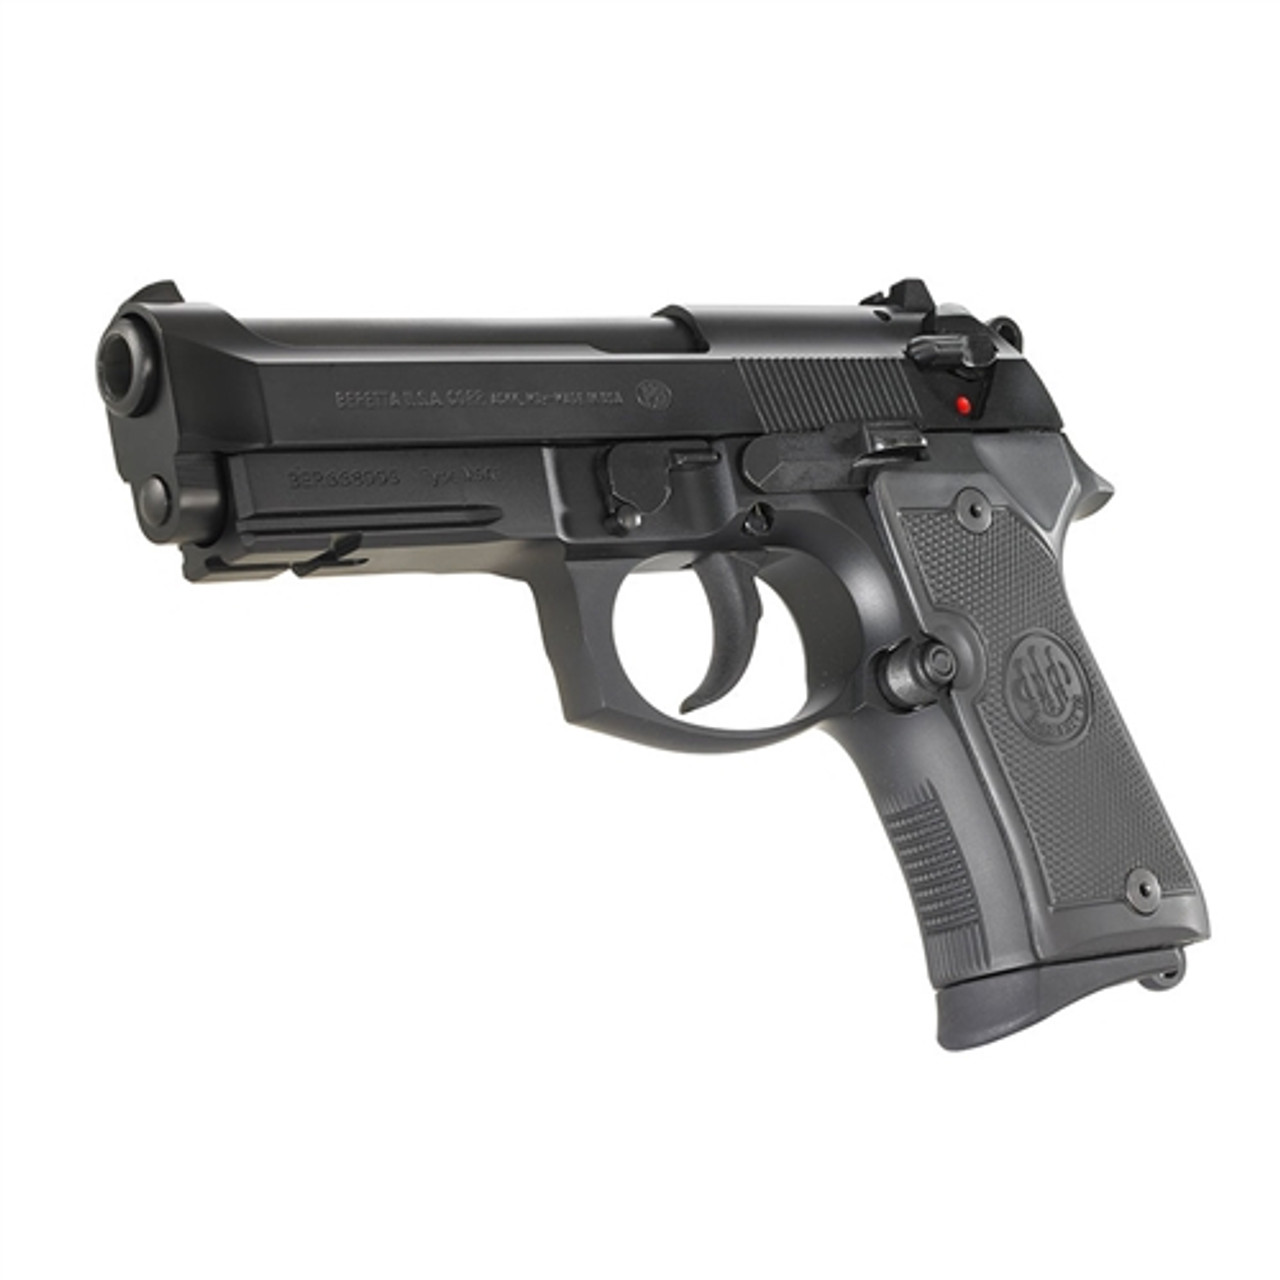 Beretta 92FS Type M9A1 Compact 9mm Semi Auto Pistol w/ 2 Magazines